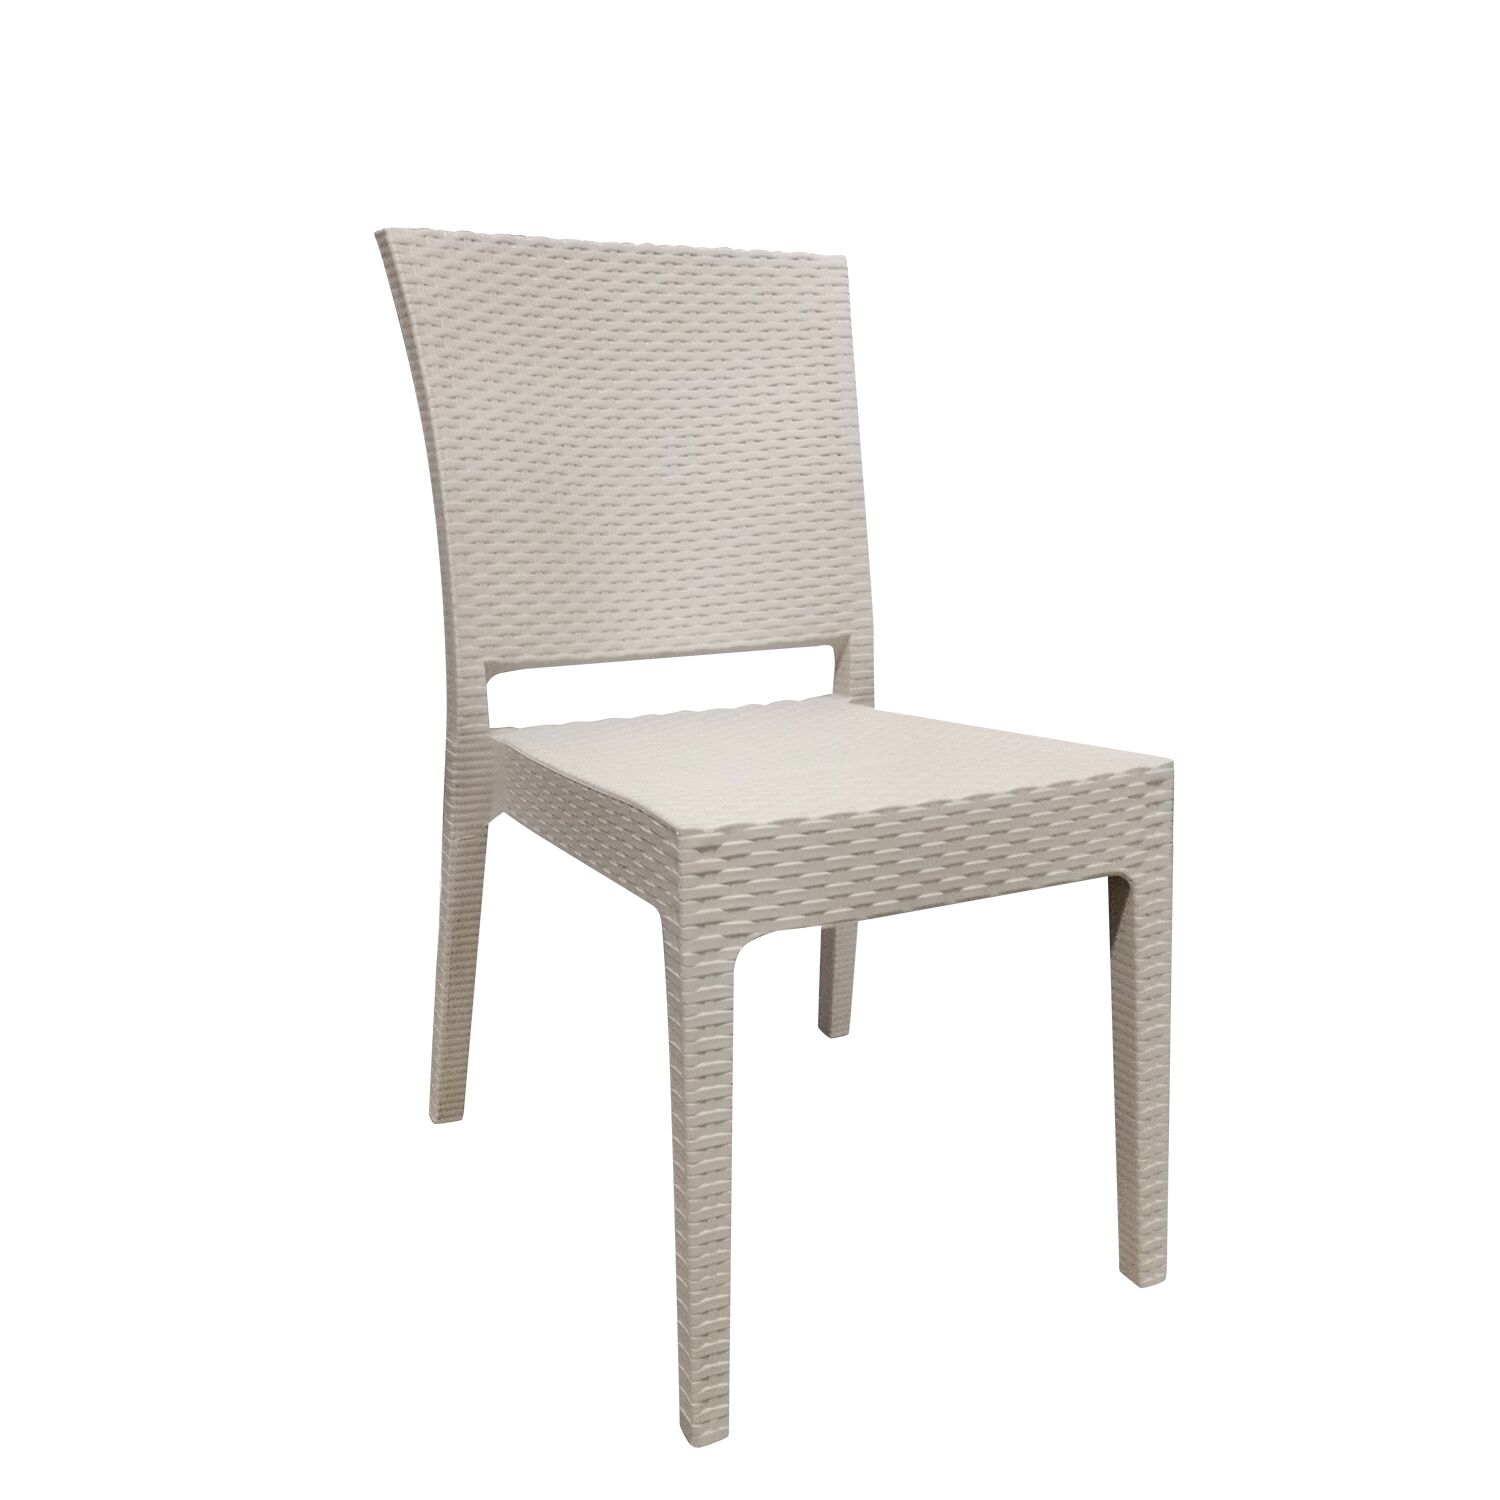 Garden Chair Cappuccino Rattan 47x55x87cm